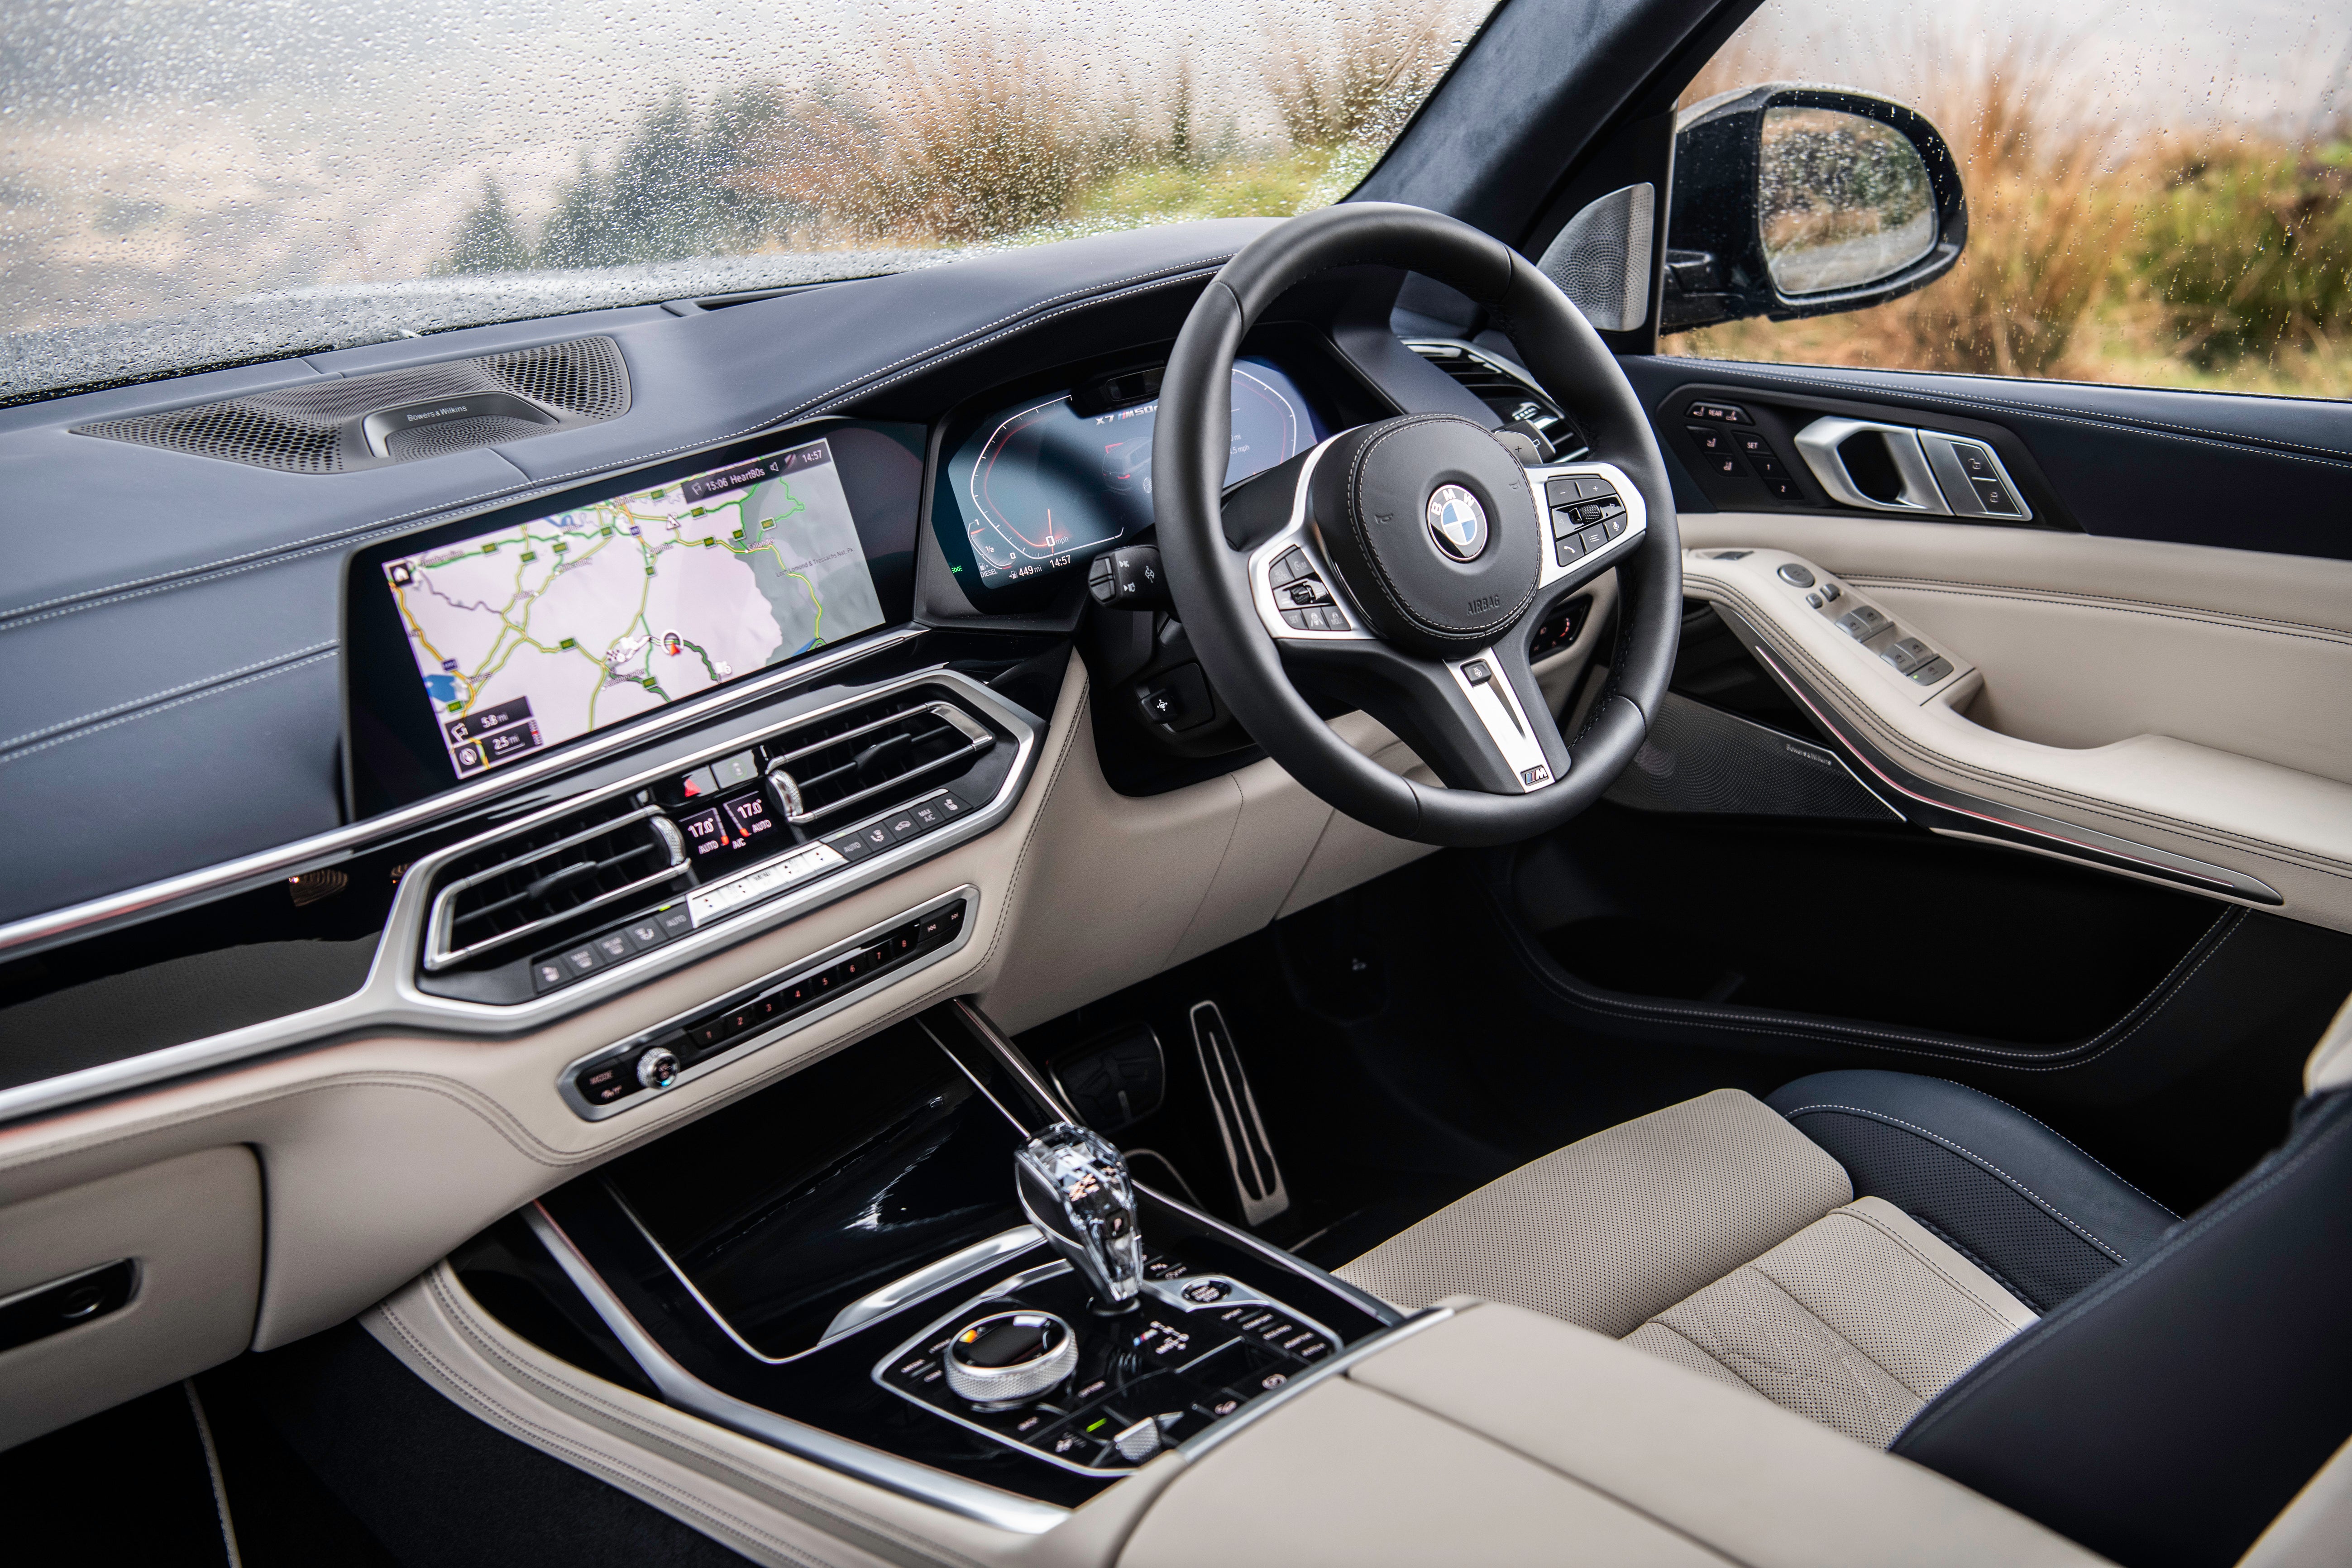 BMW X7 Review 2022: interior